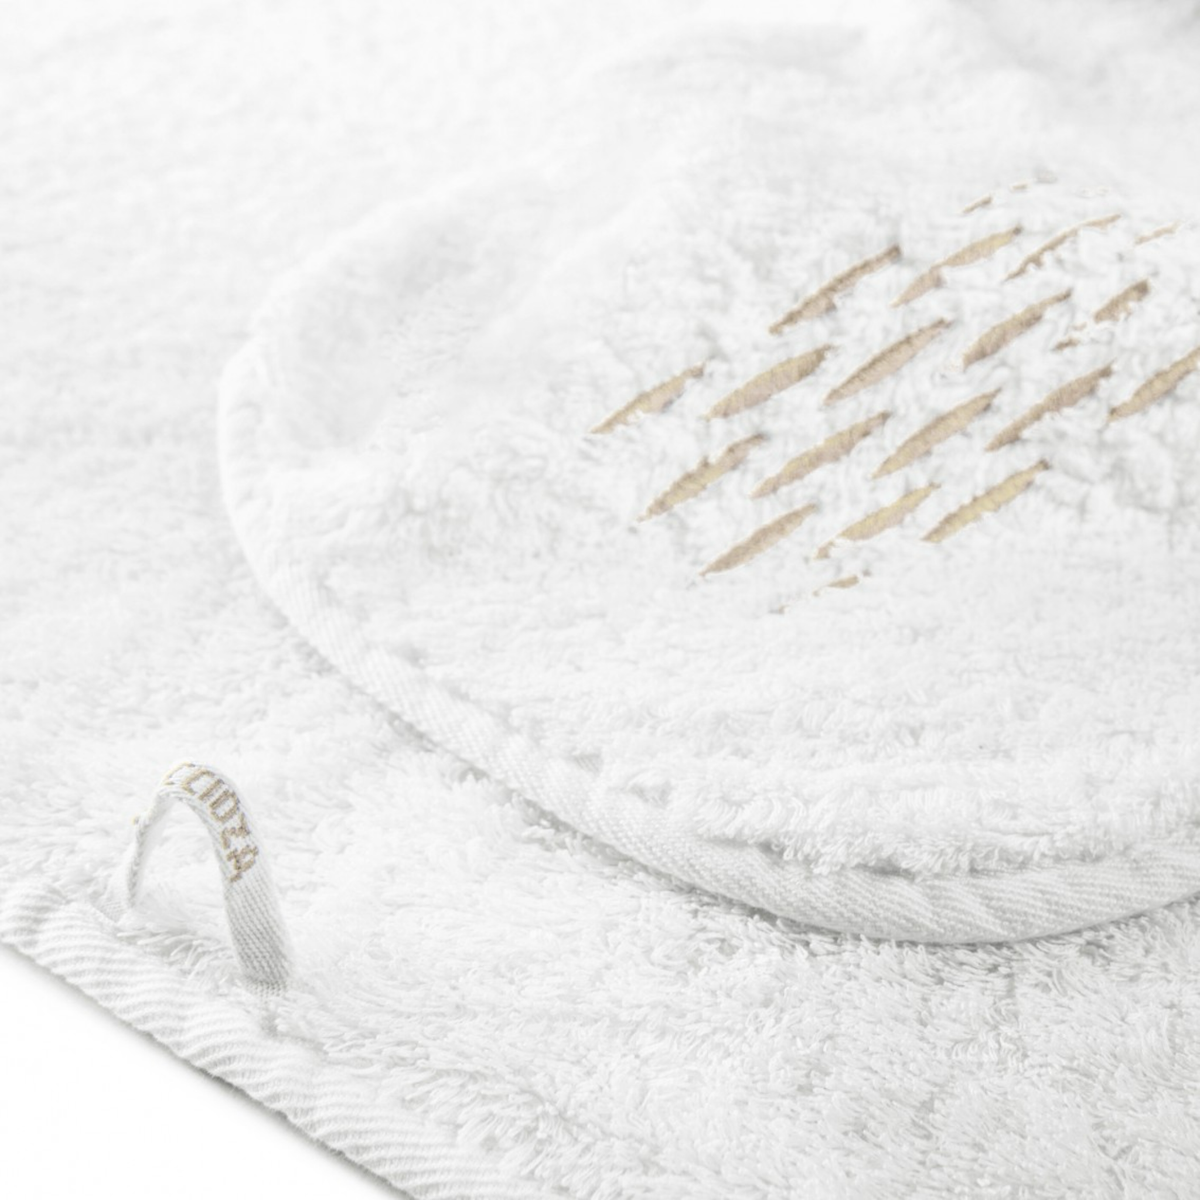 Graccioza Alhambra Bath Towel Closeup of White Fog Color and Hanging Loop